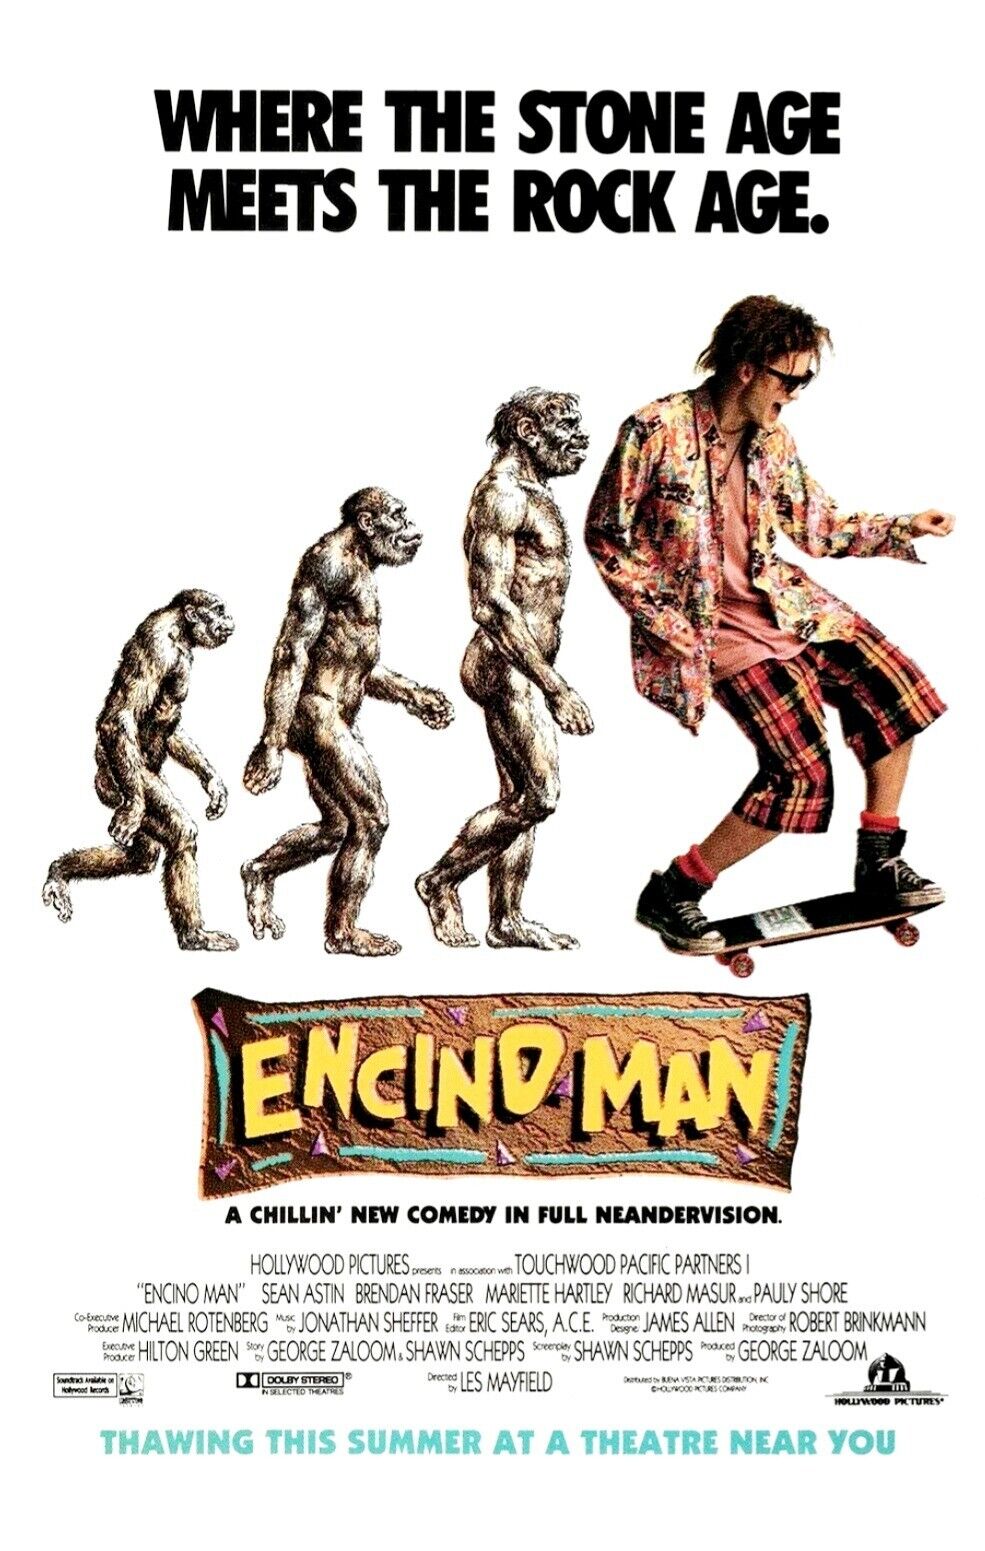 1992 Encino Man Vintage Print Ad/Poster Official Brendan Fraser Movie Promo Art